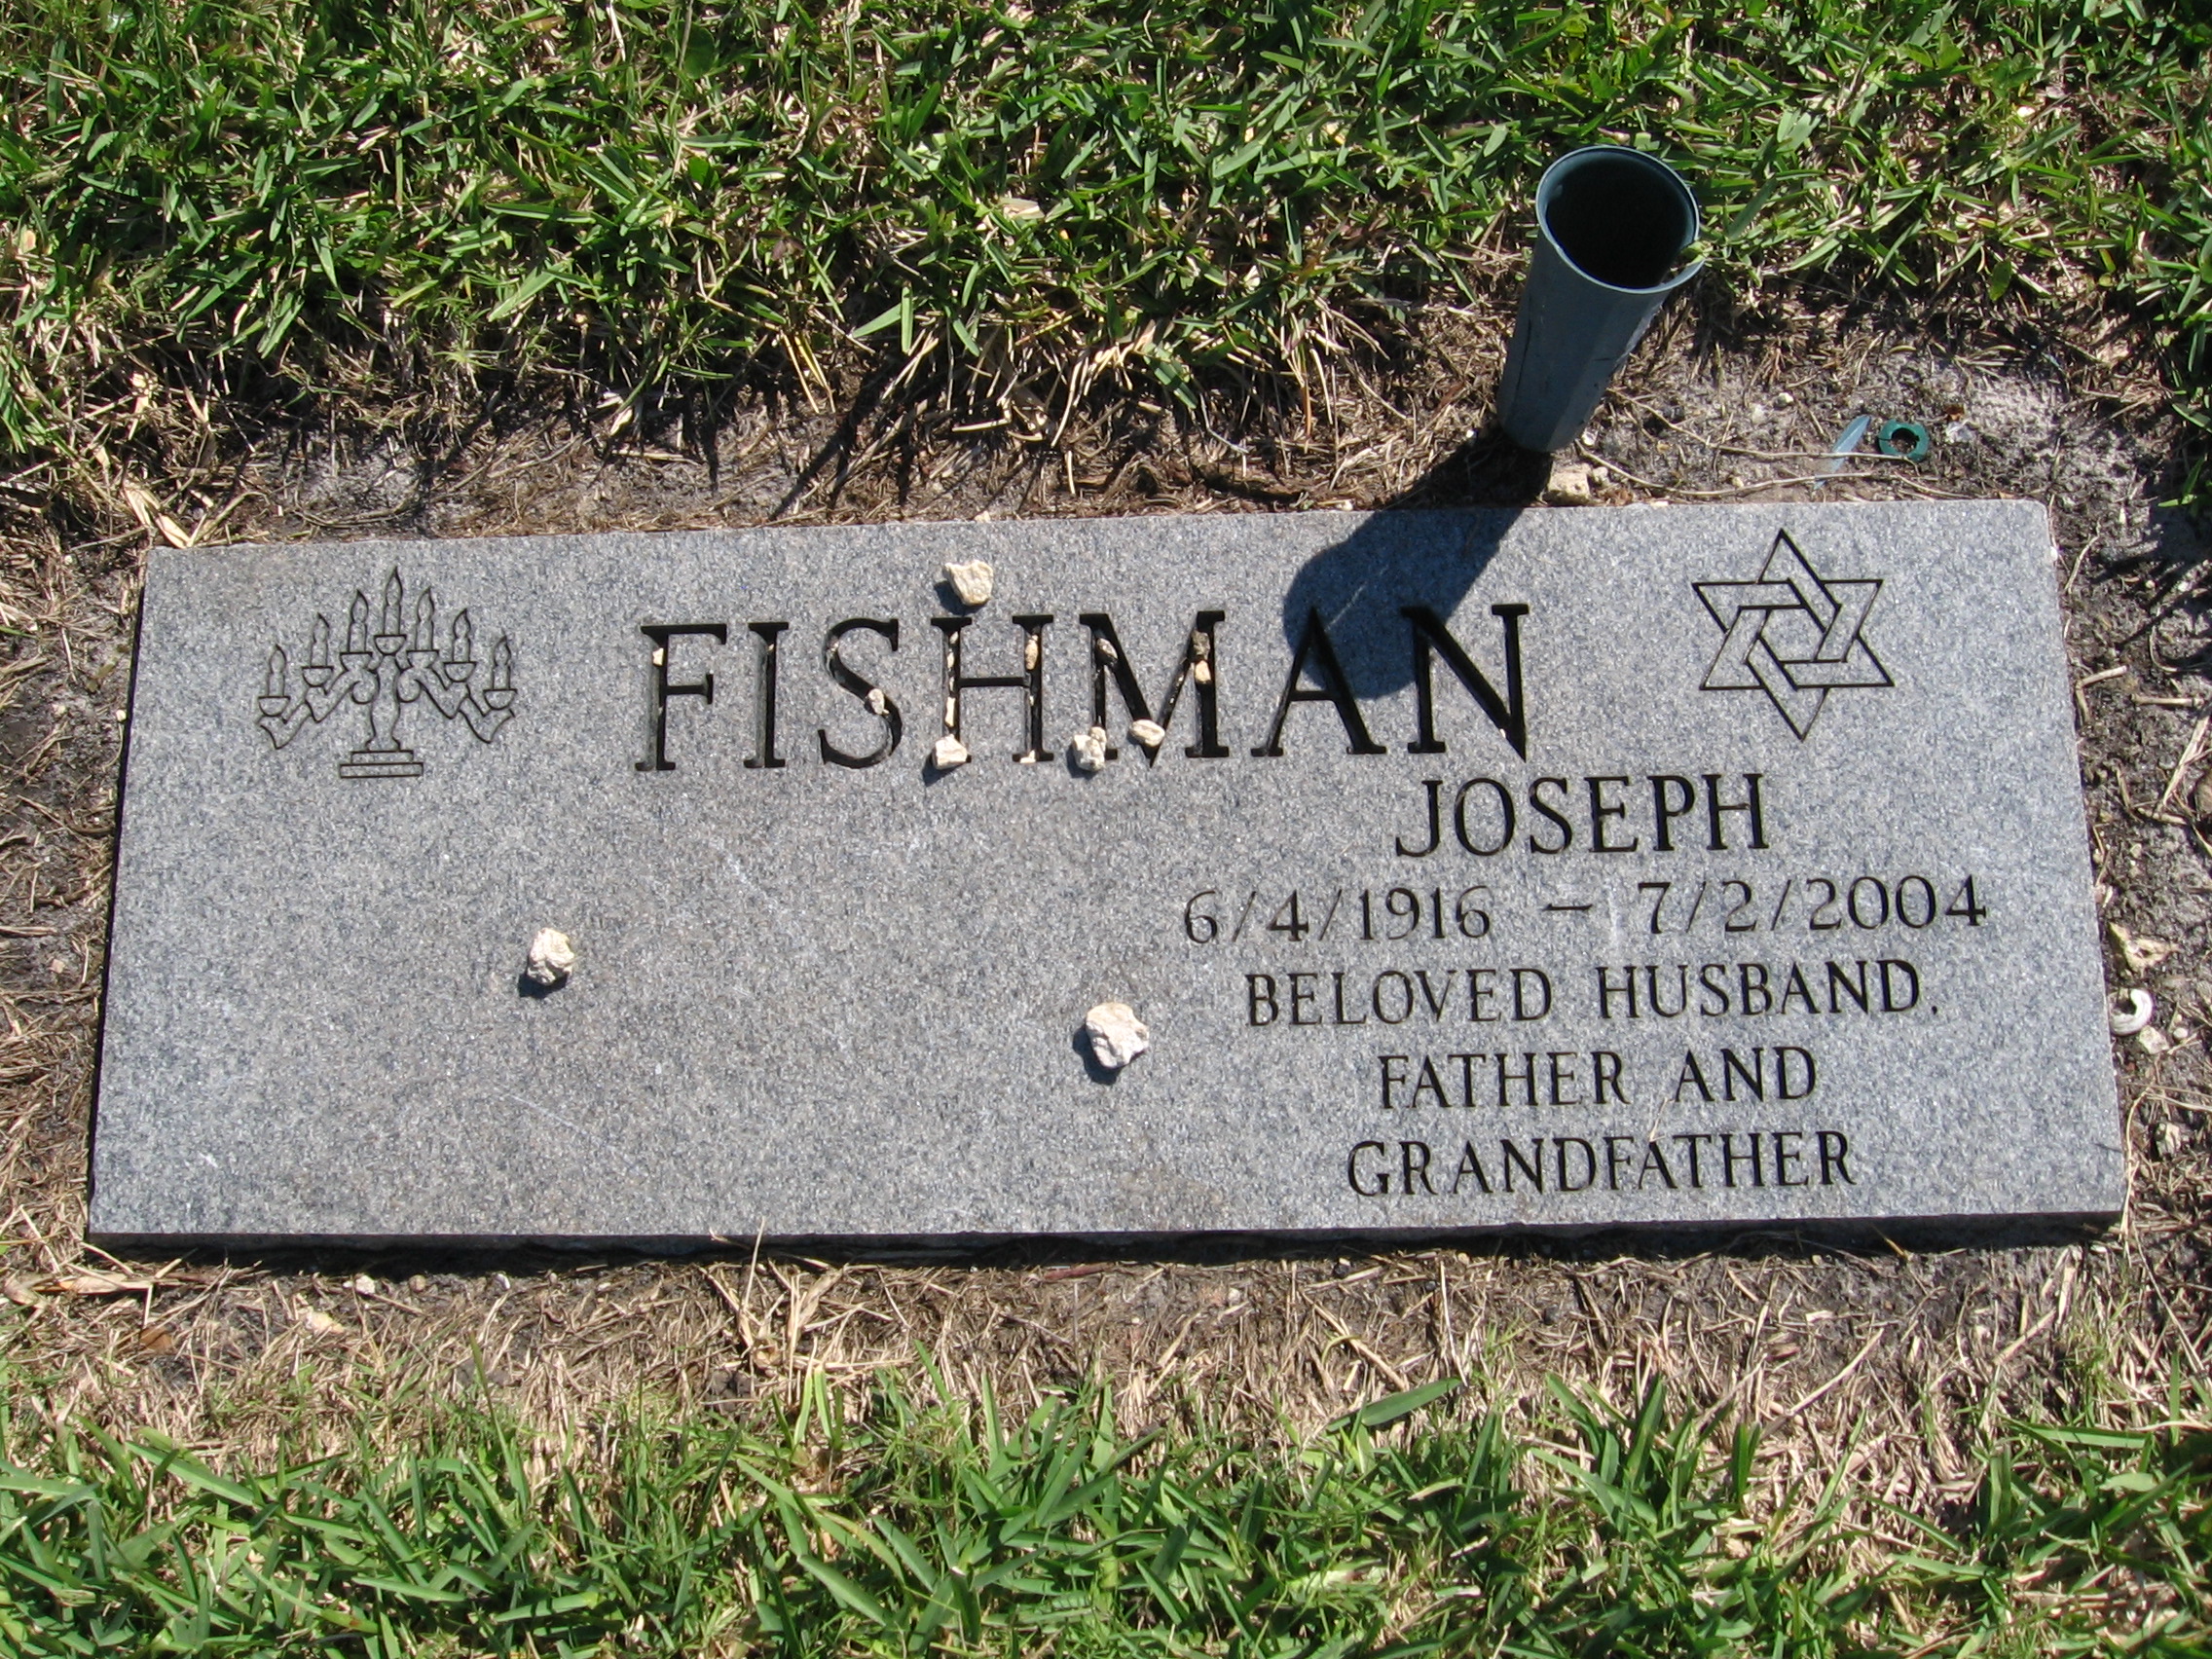 Joseph Fishman